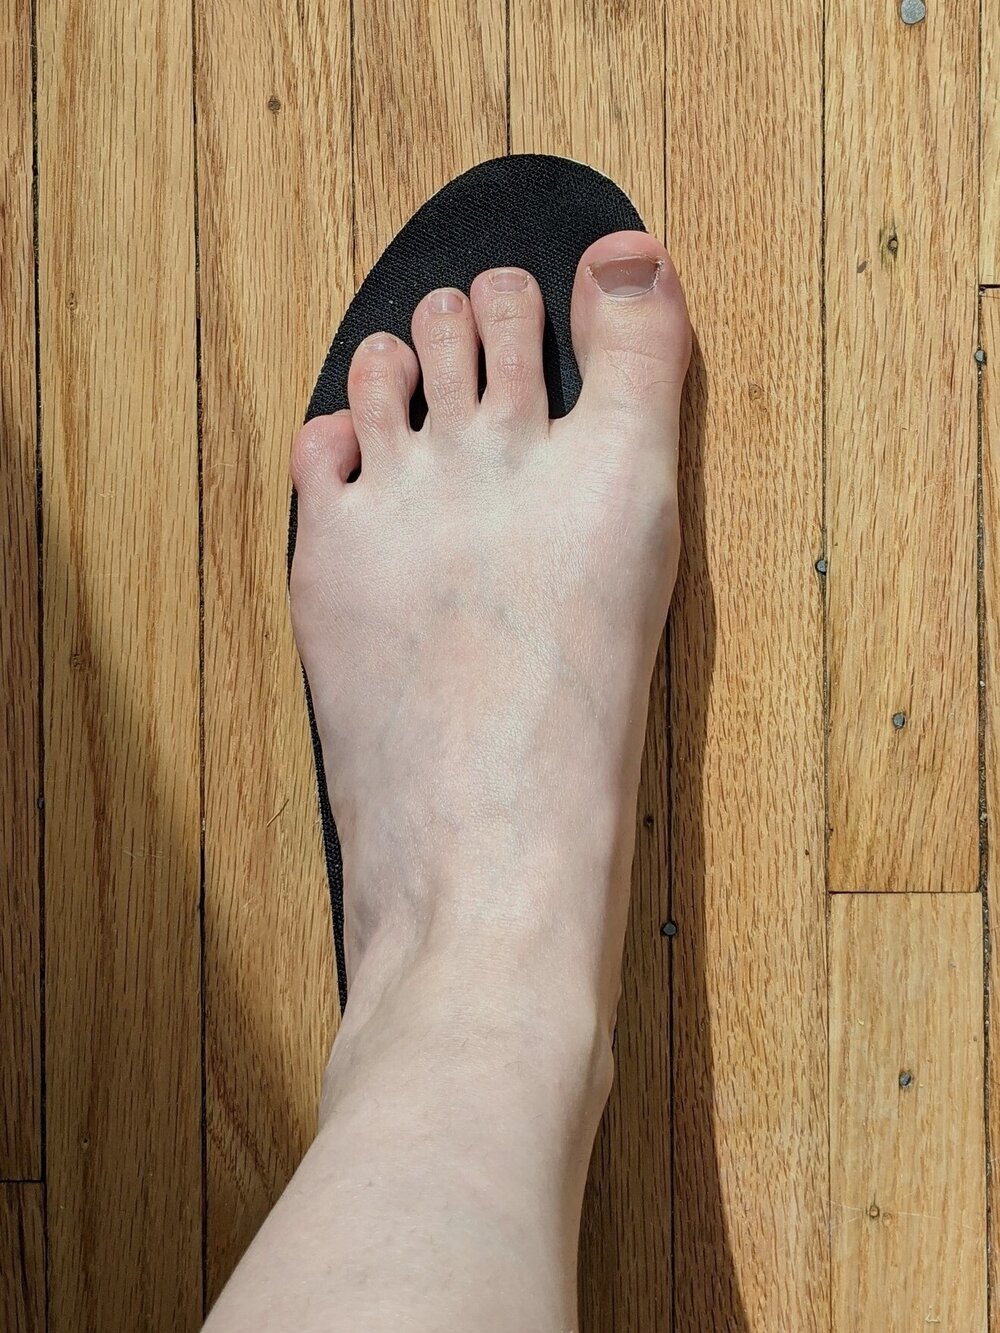 Kayla jane feet